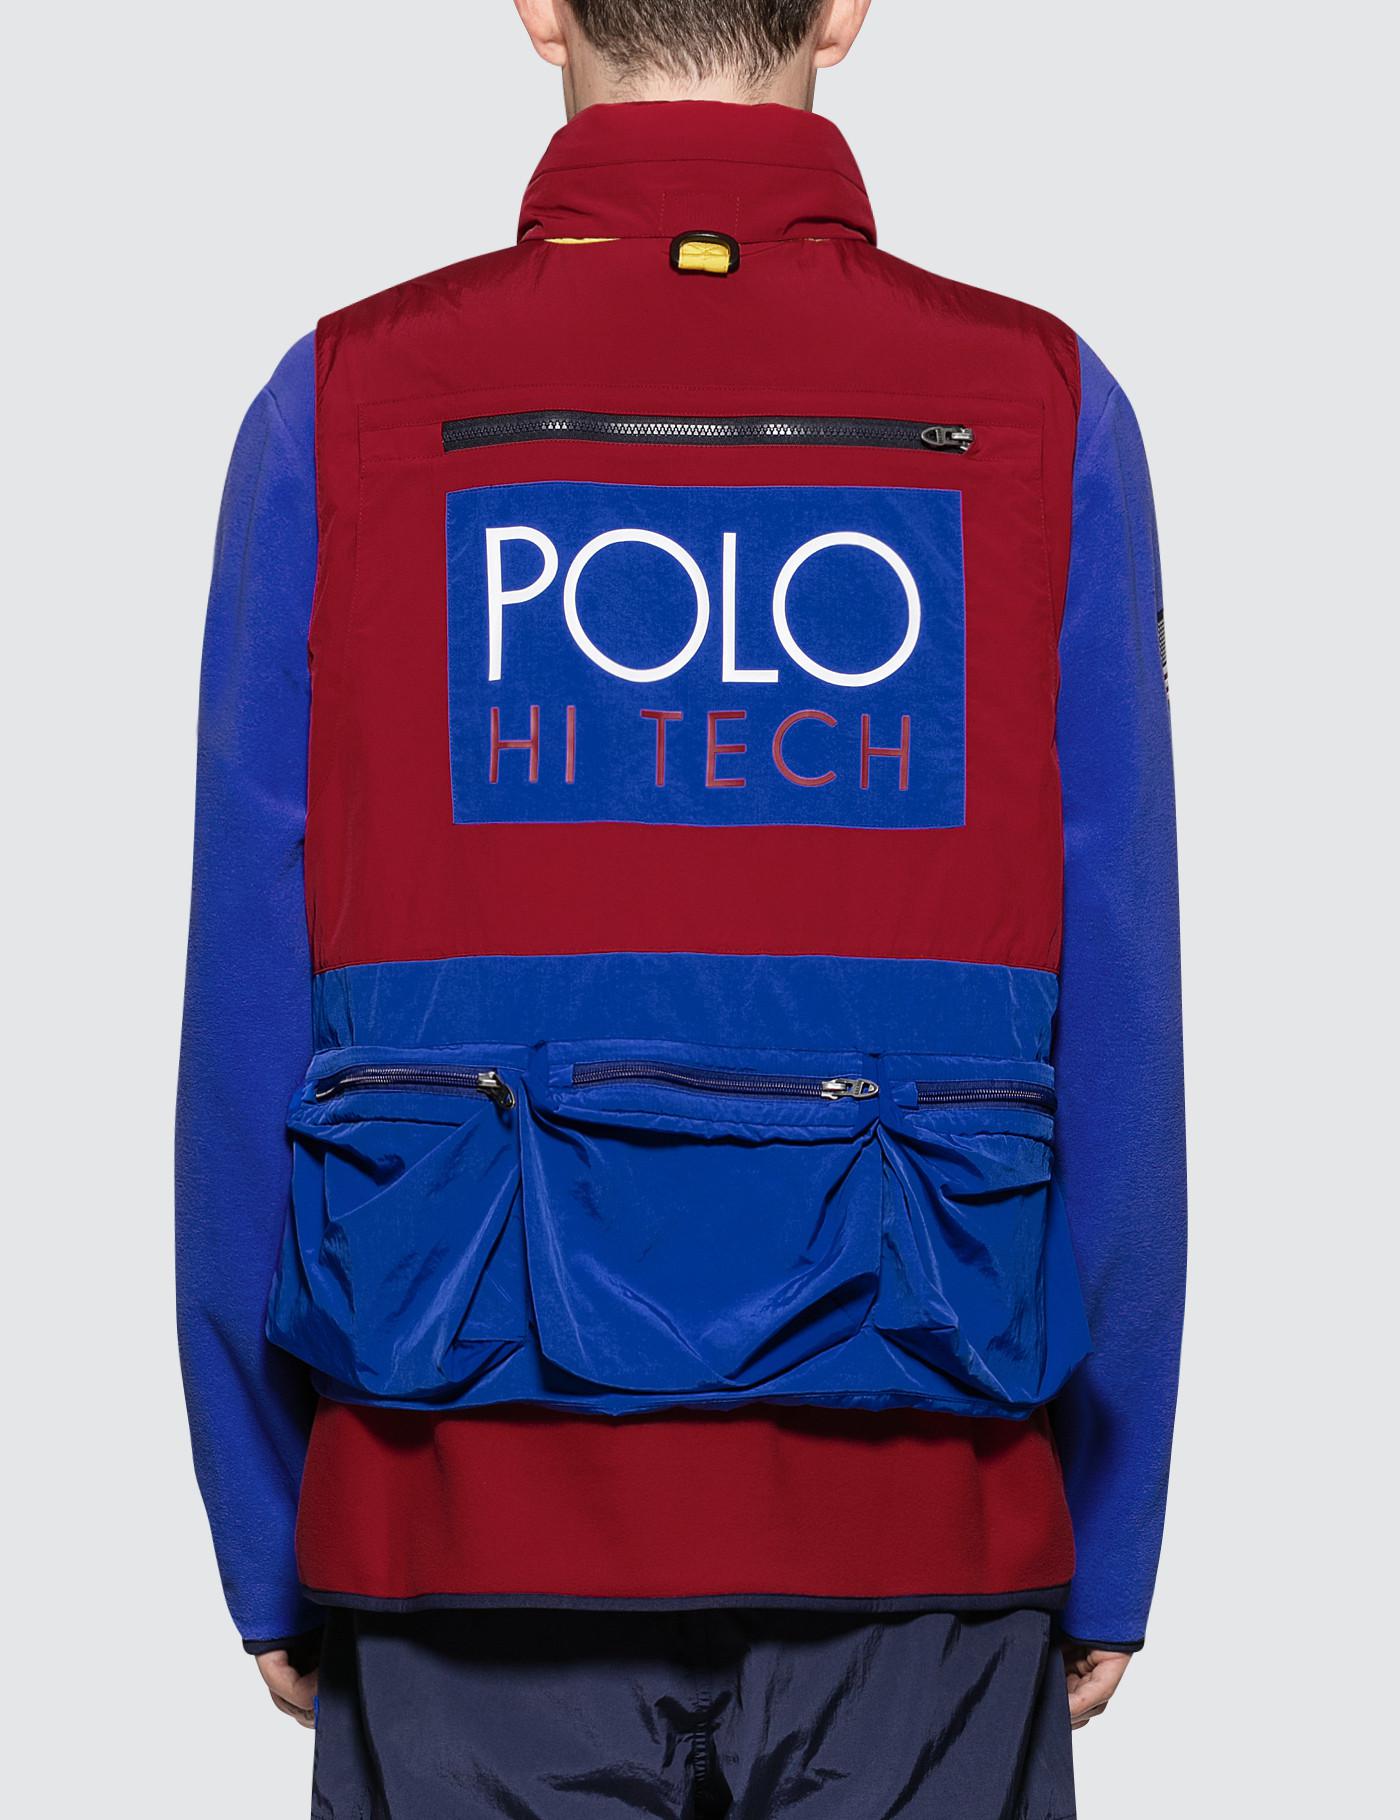 Polo Ralph Lauren Hi Tech Vest in Blue for Men - Lyst